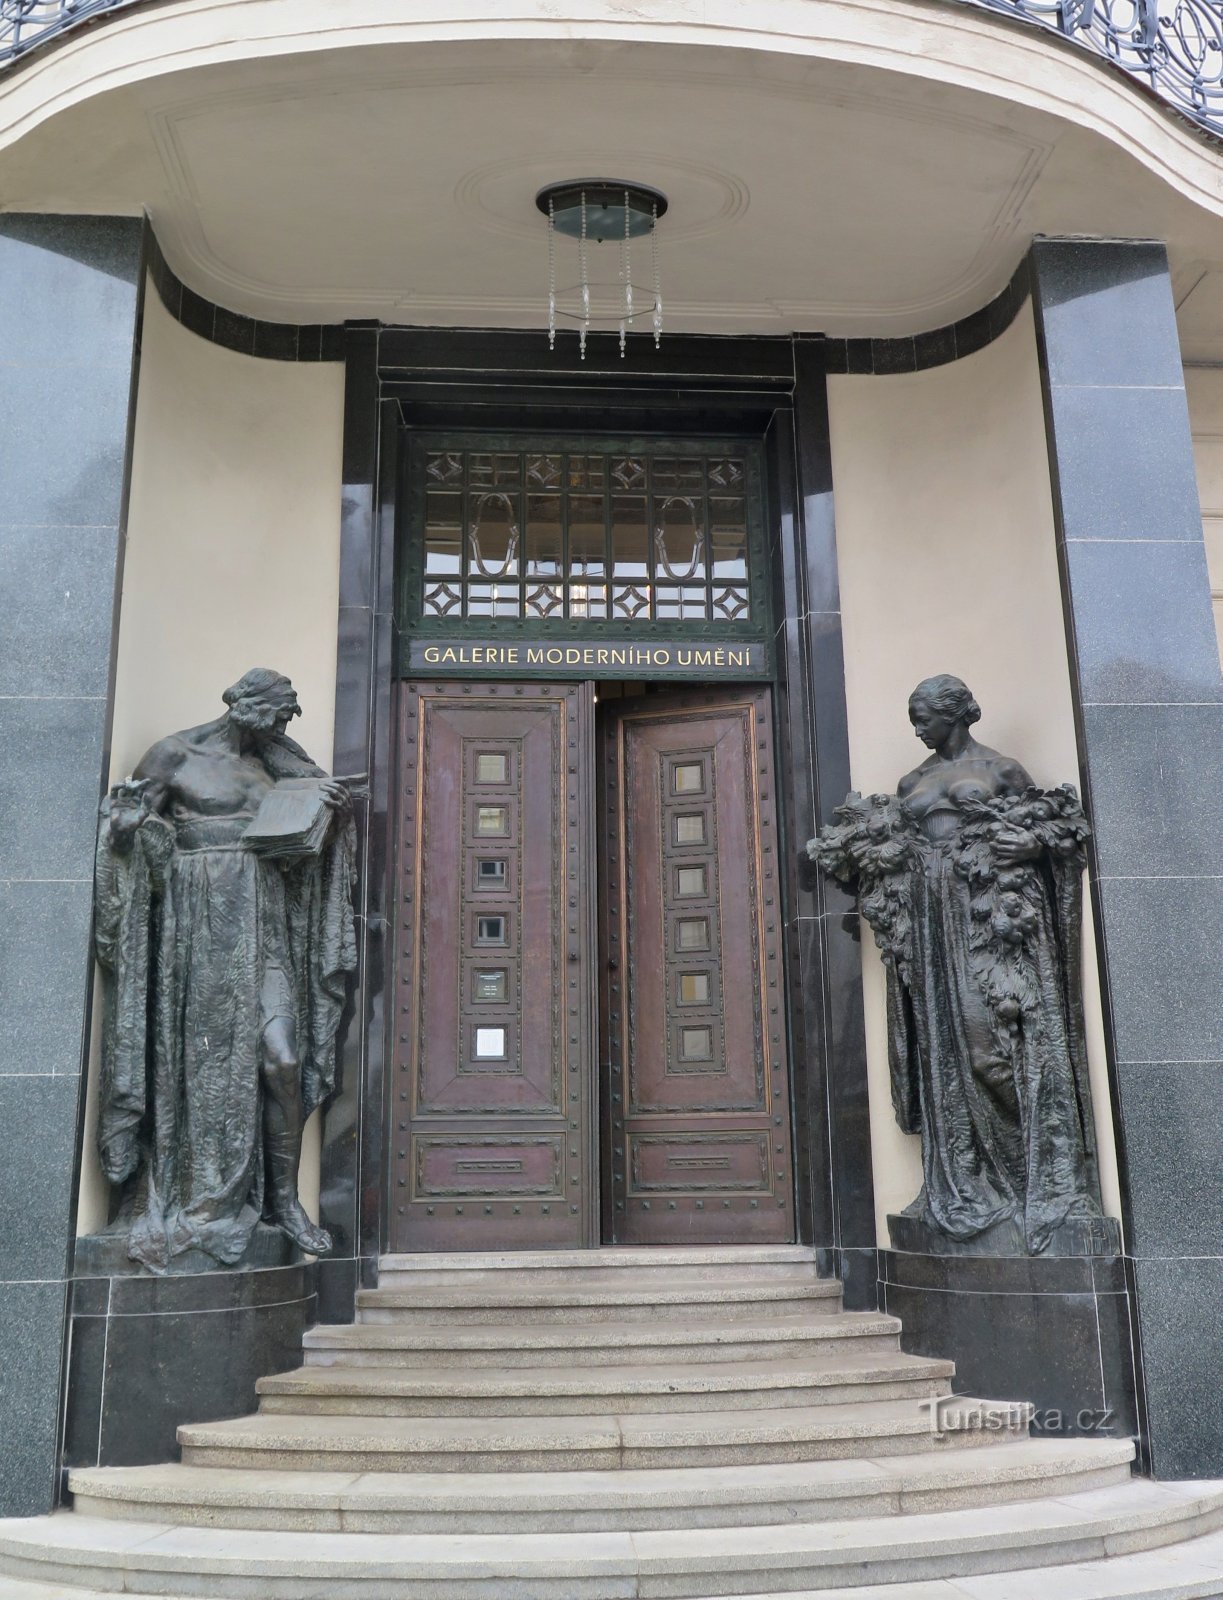 Eingangsskulpturen von Ladislav Šaloun